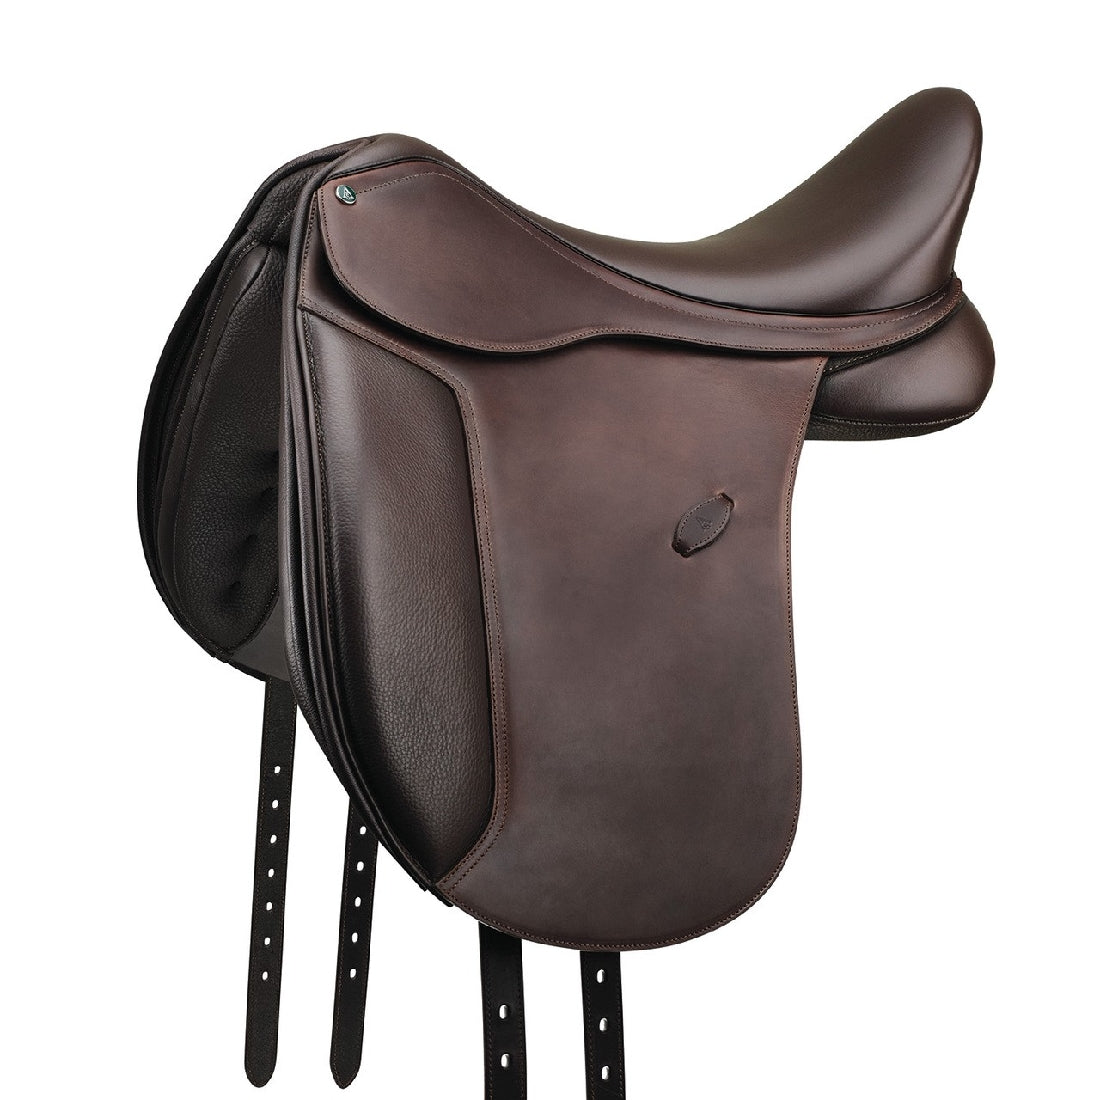 Arena Saddles brand dark brown leather horse saddle isolated on white.